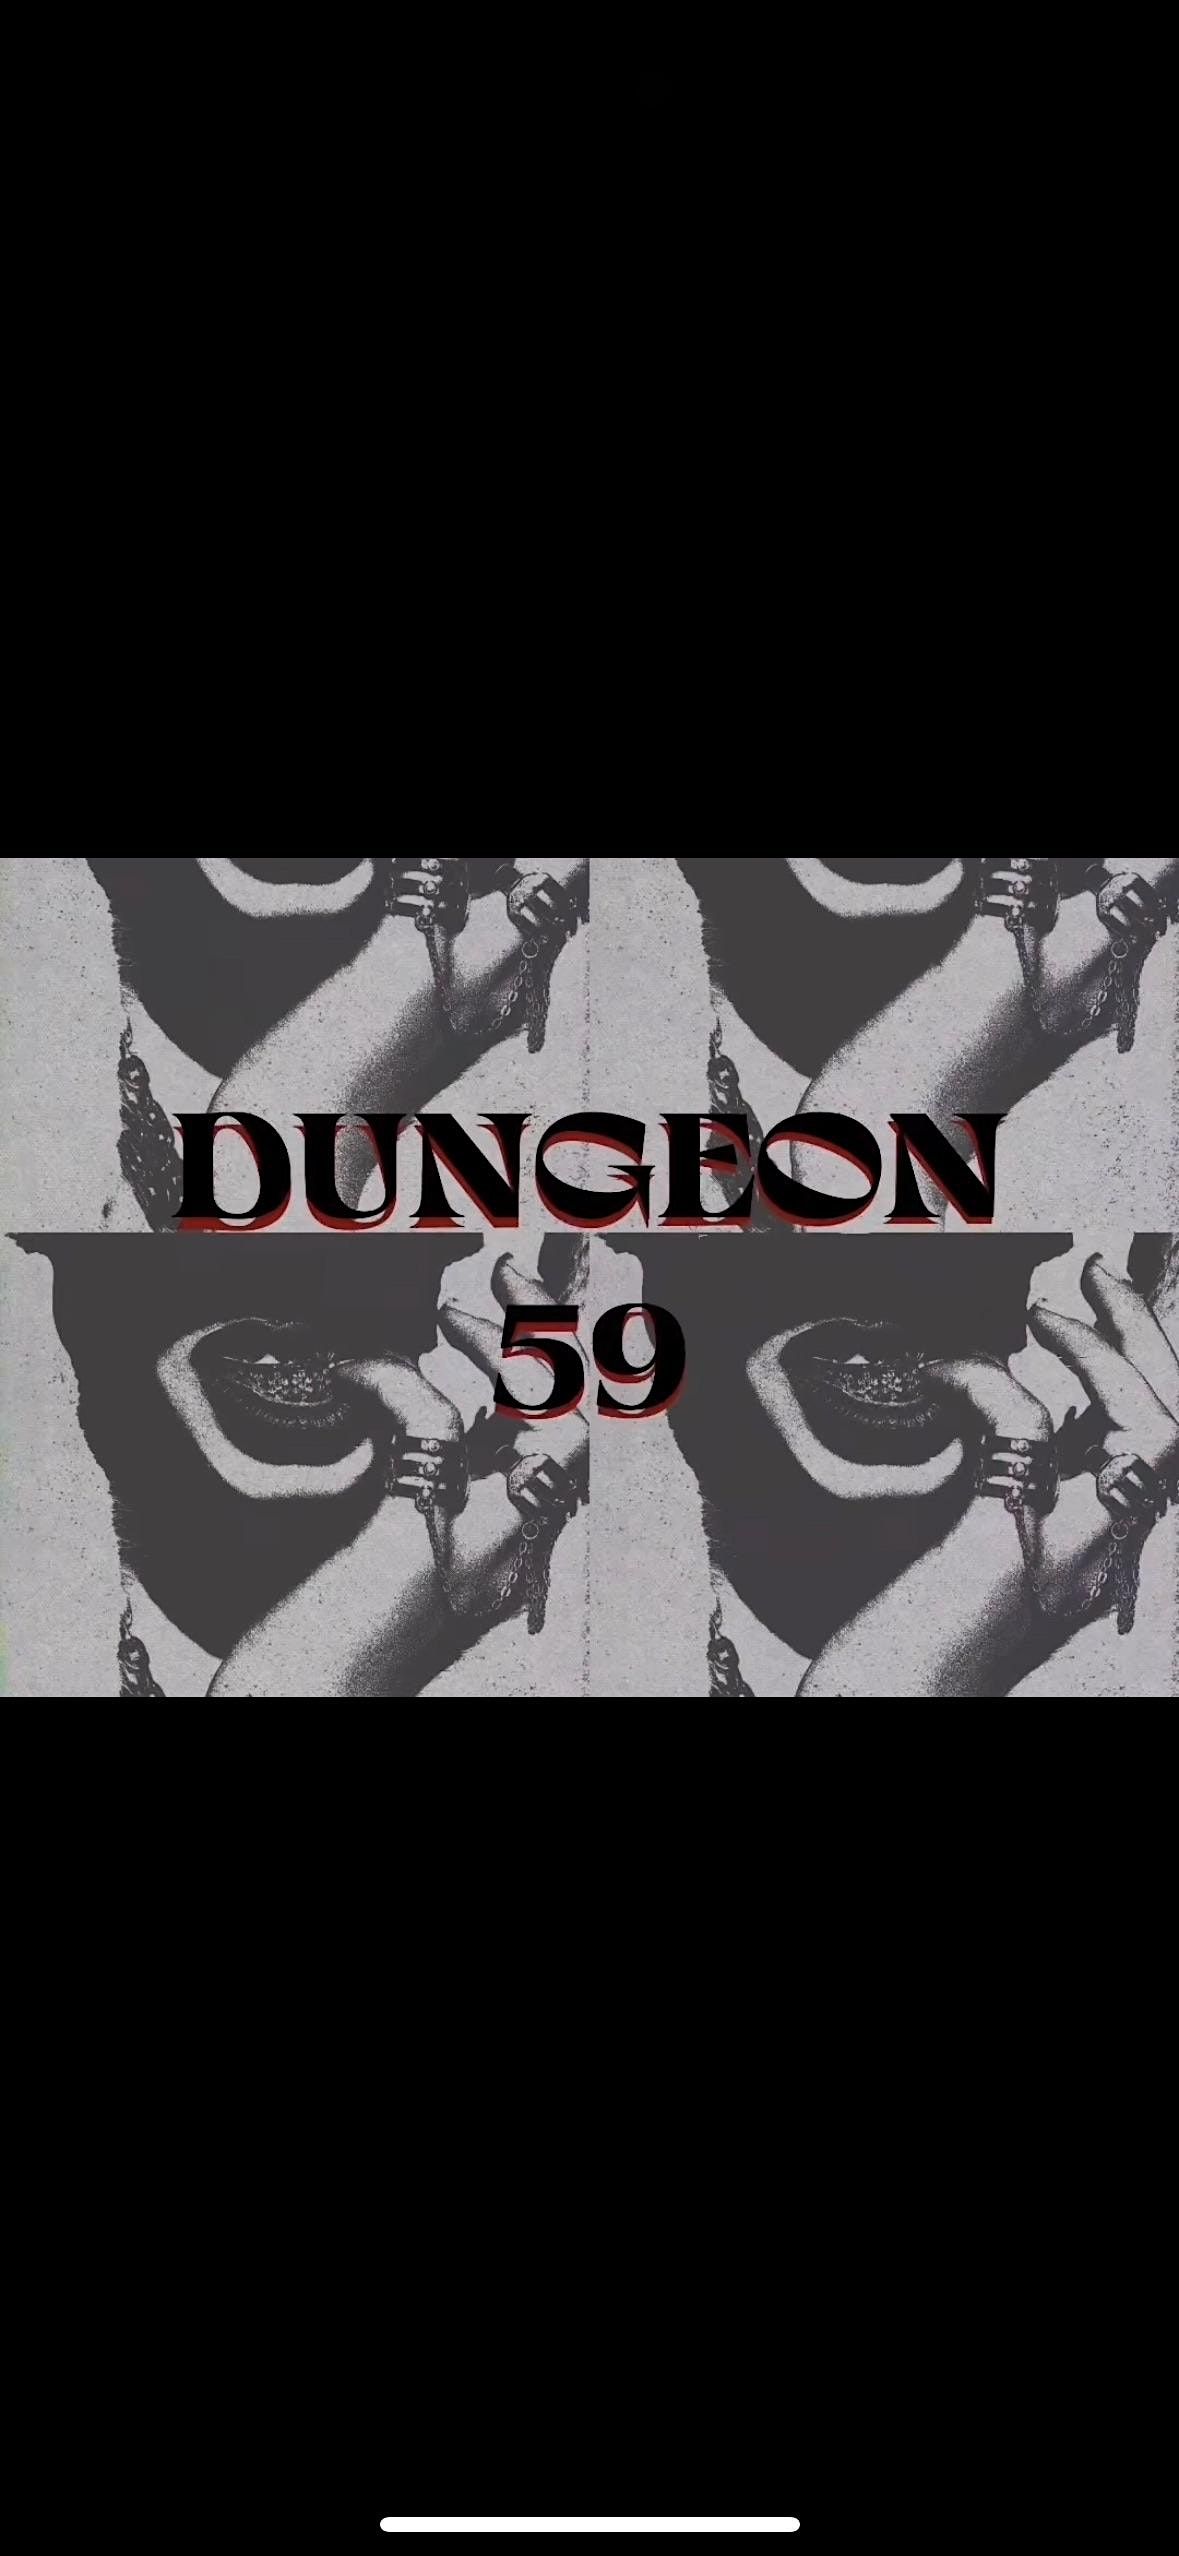 DUNGEON 59 CLUB NIGHT